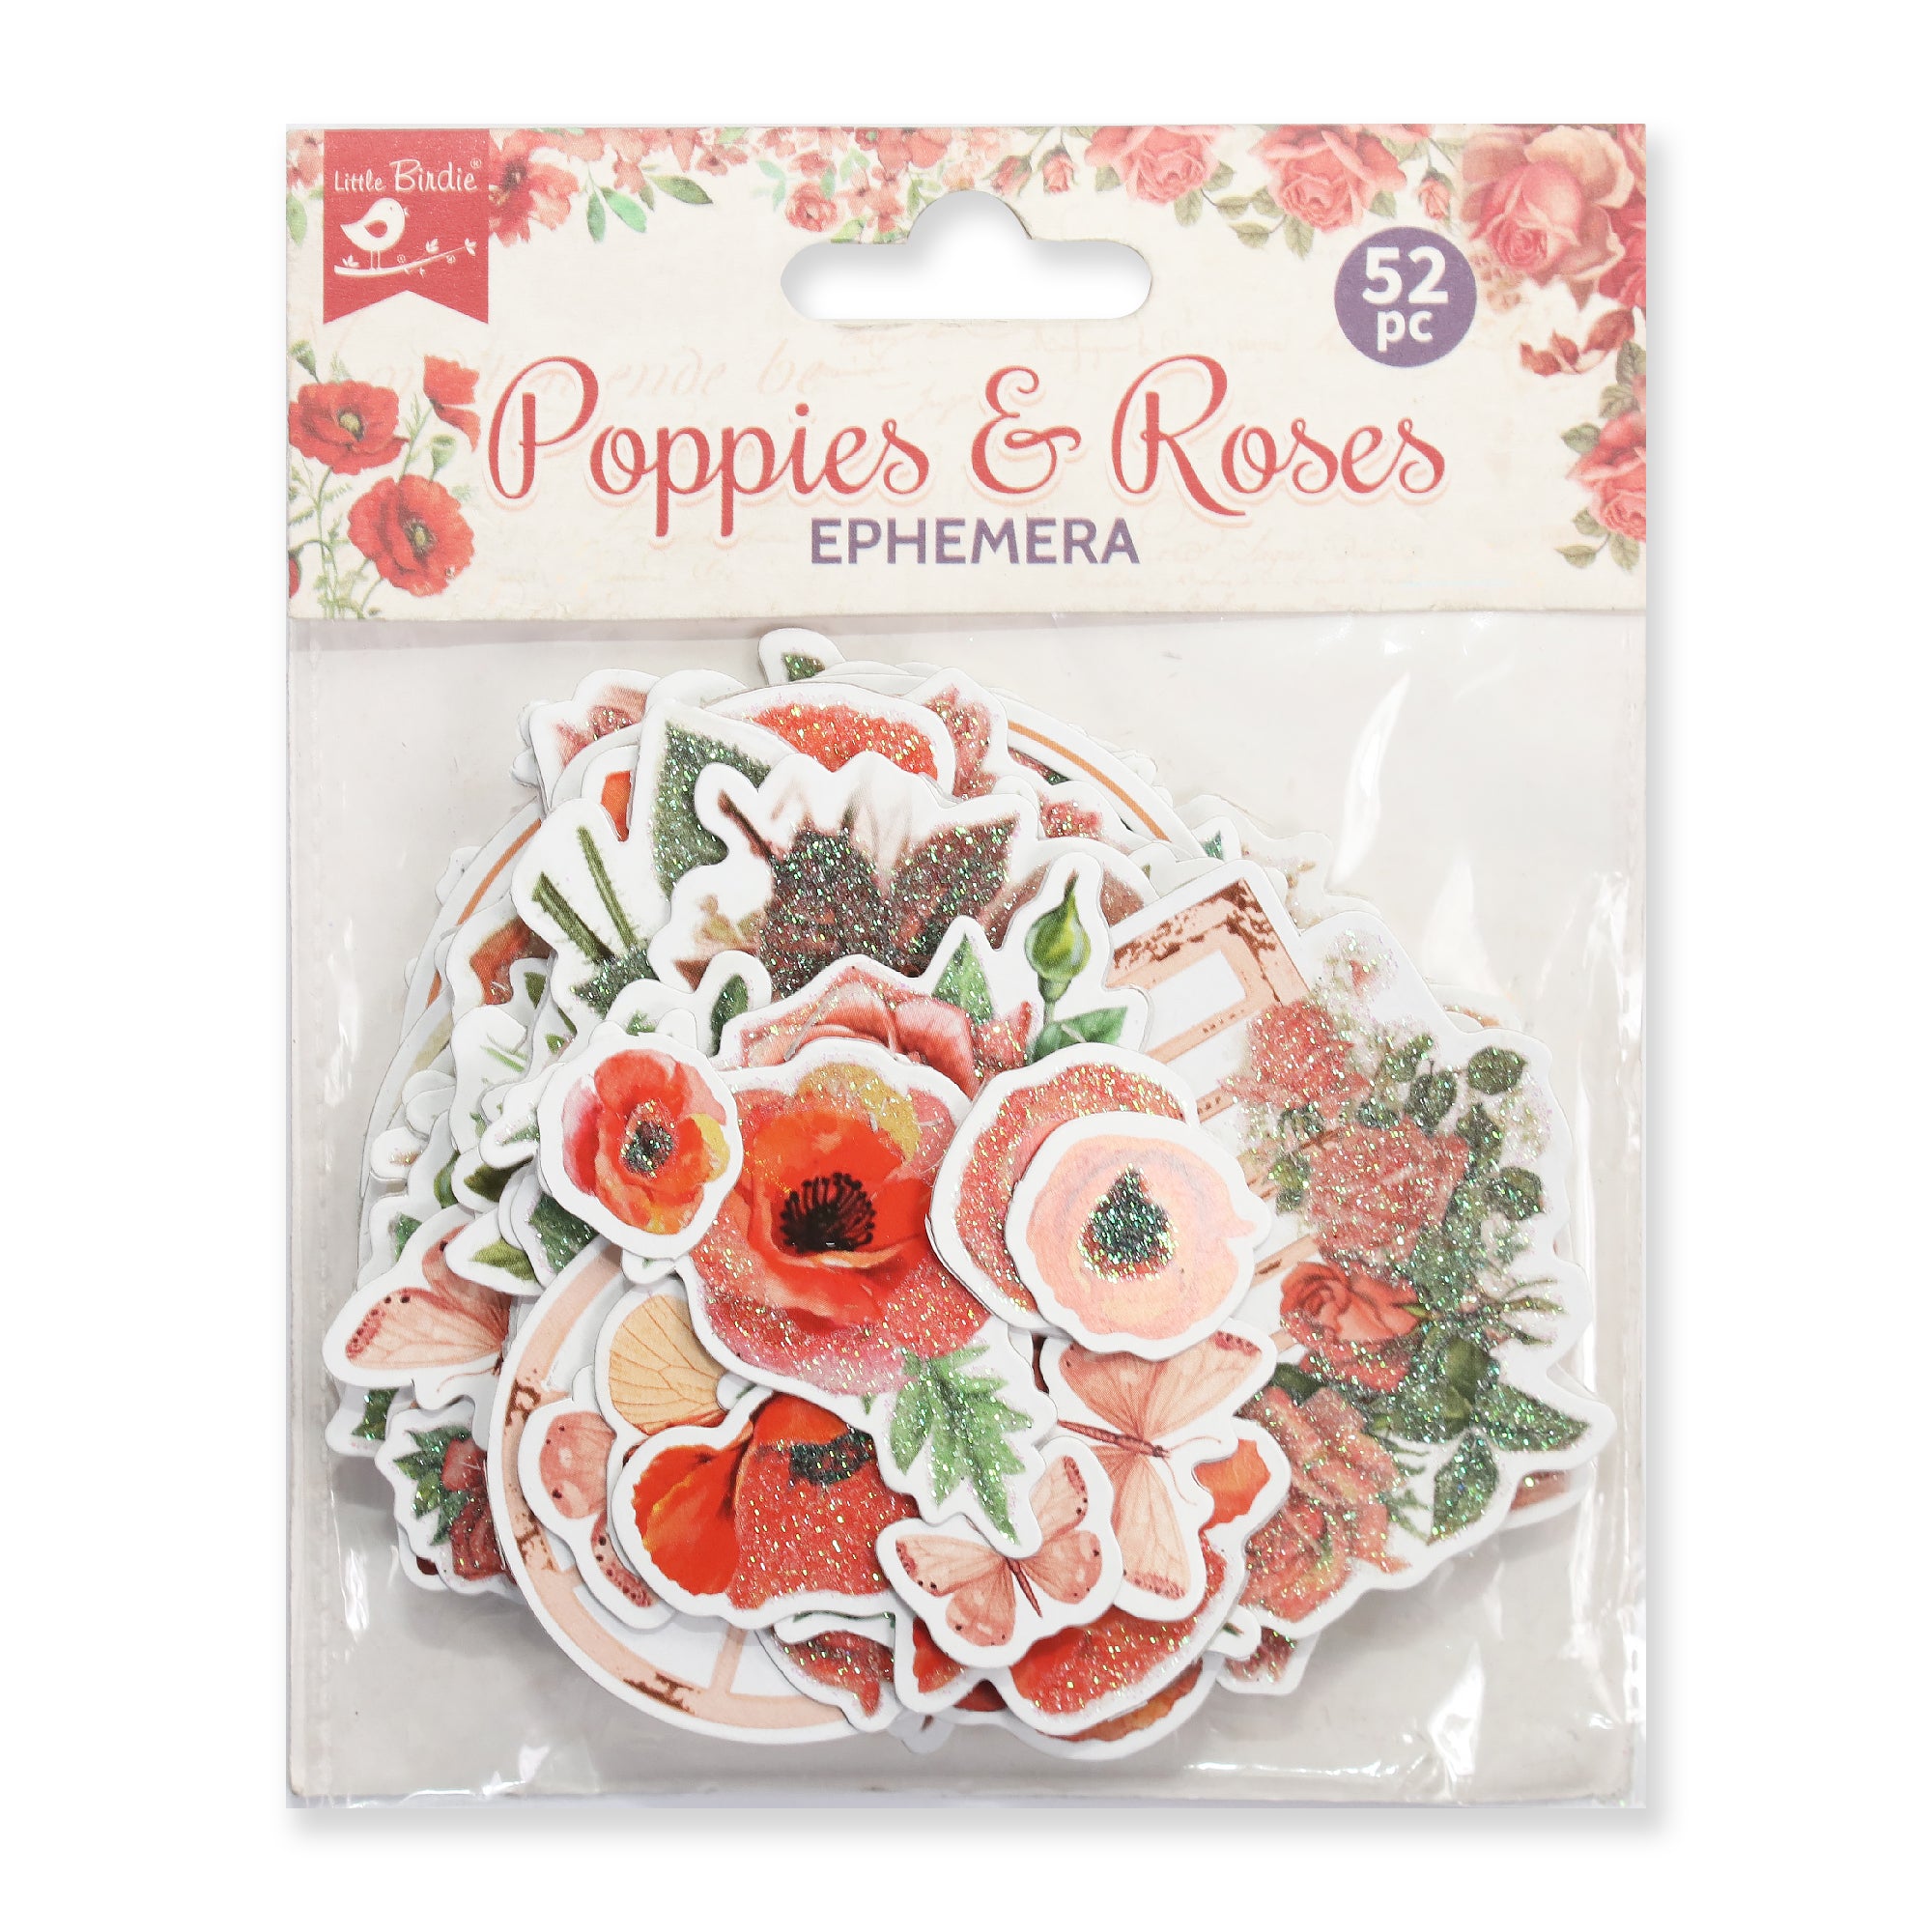 Poppies & Roses Ephemera Stickers 52pcs